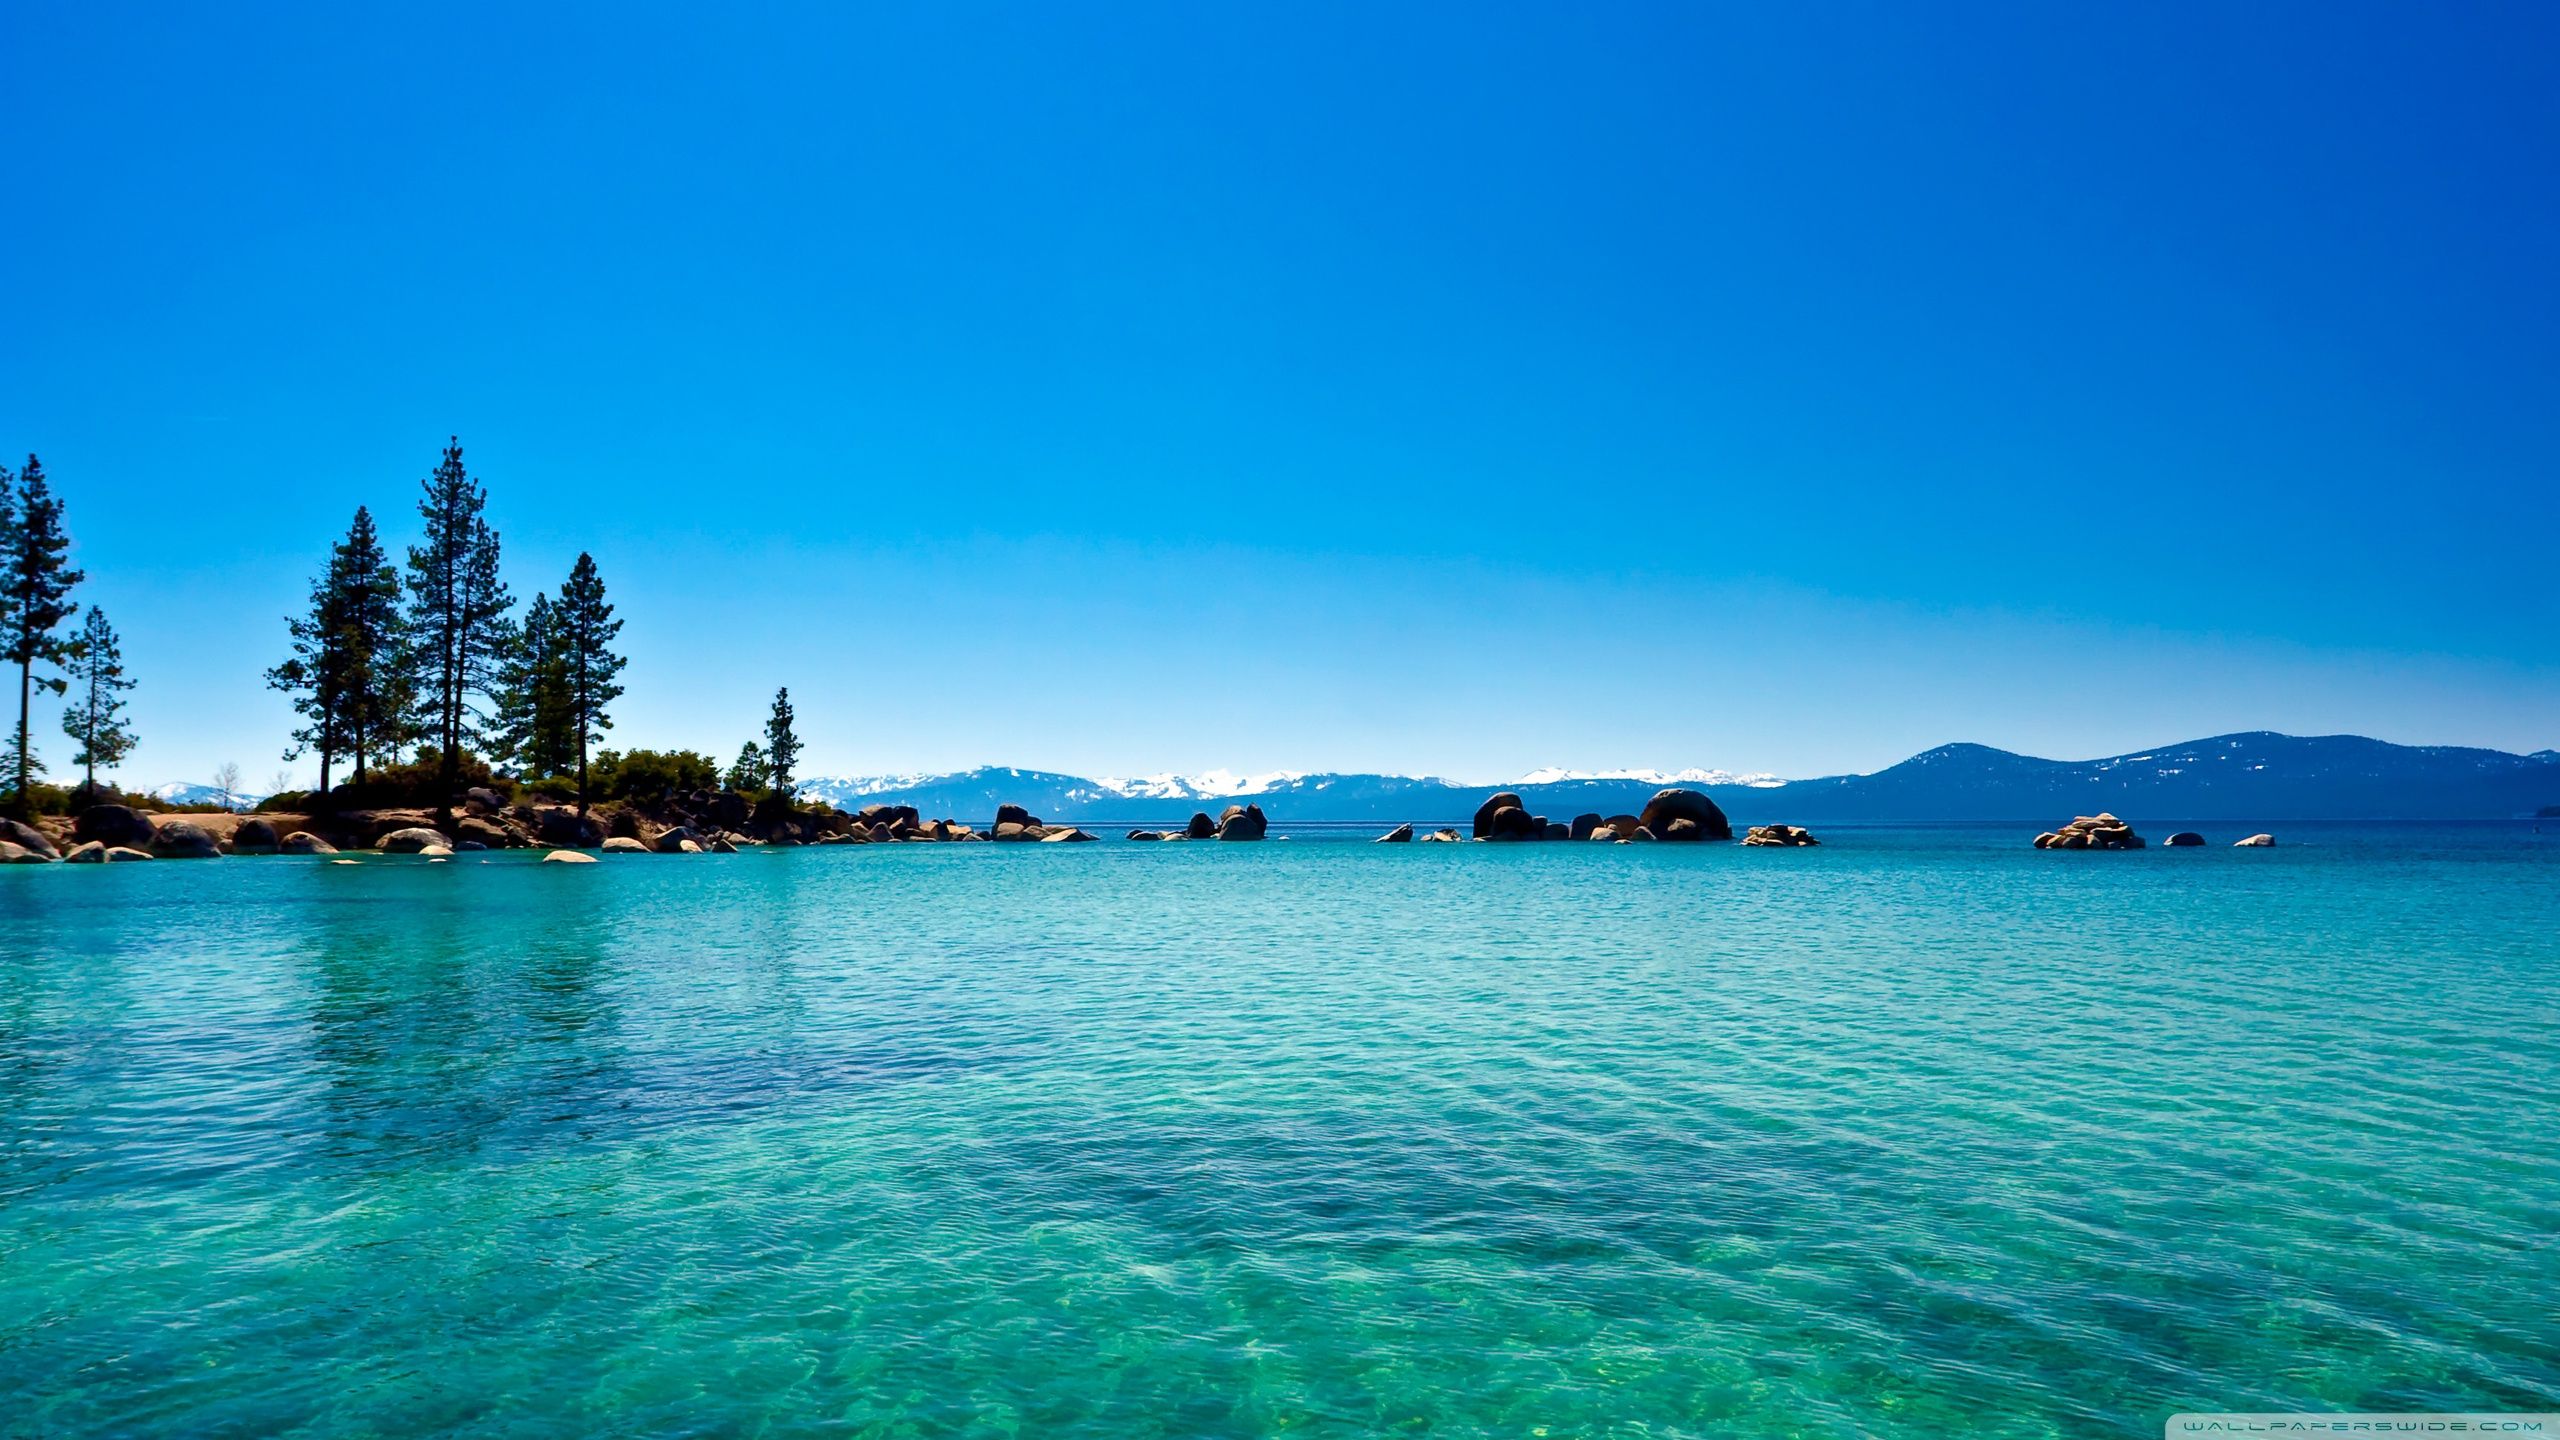 Lake Tahoe, California Ultra HD Desktop Background Wallpaper for 4K UHD TV, Multi Display, Dual Monitor, Tablet